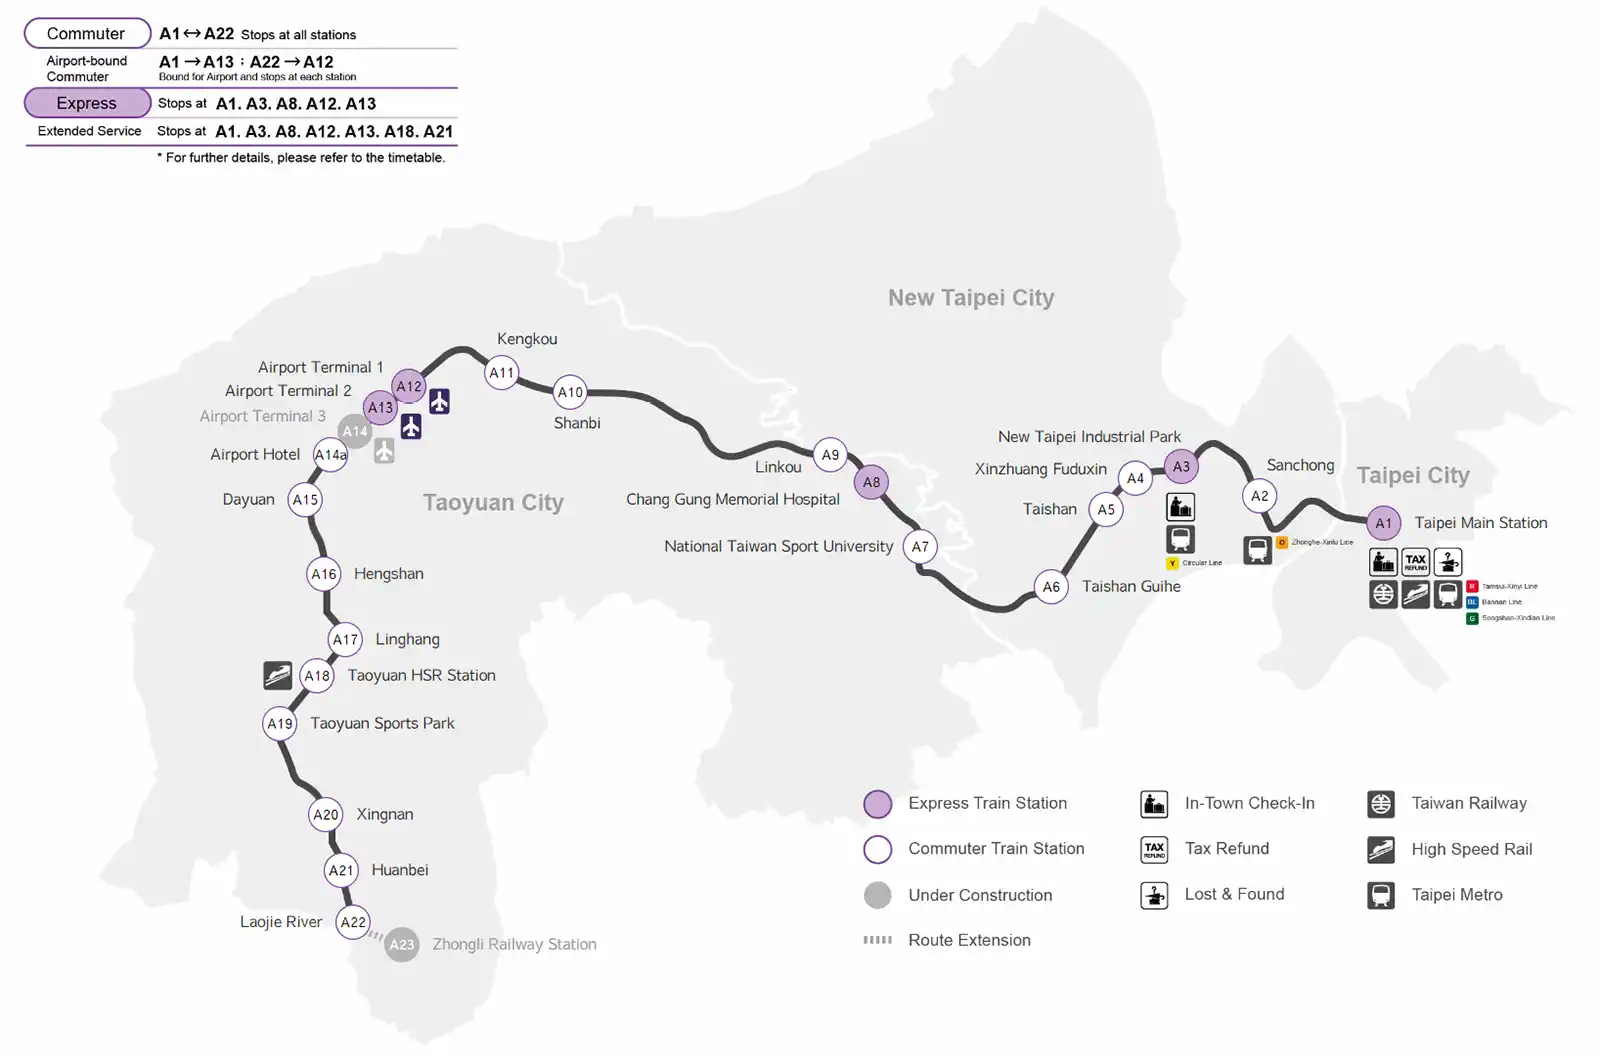 Interactive Map of the Taoyuan MRT (Airport MRT)